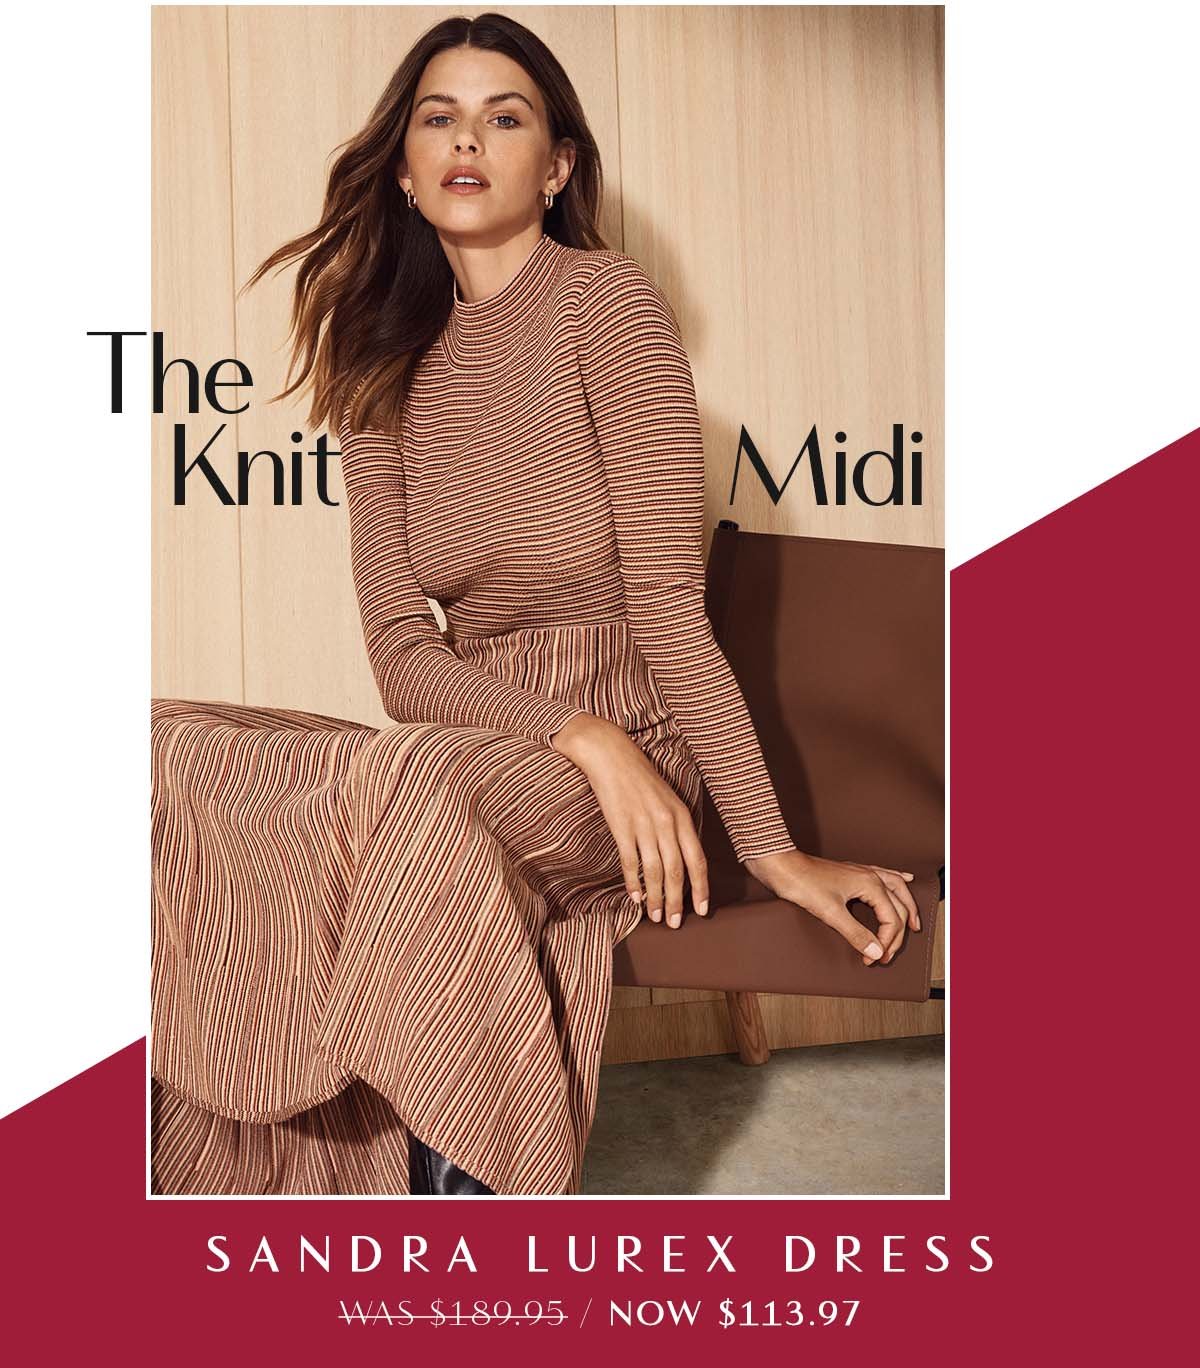 The Knit Midi. Sandra Lurex Dress WAS $189.95 / NOW $113.97